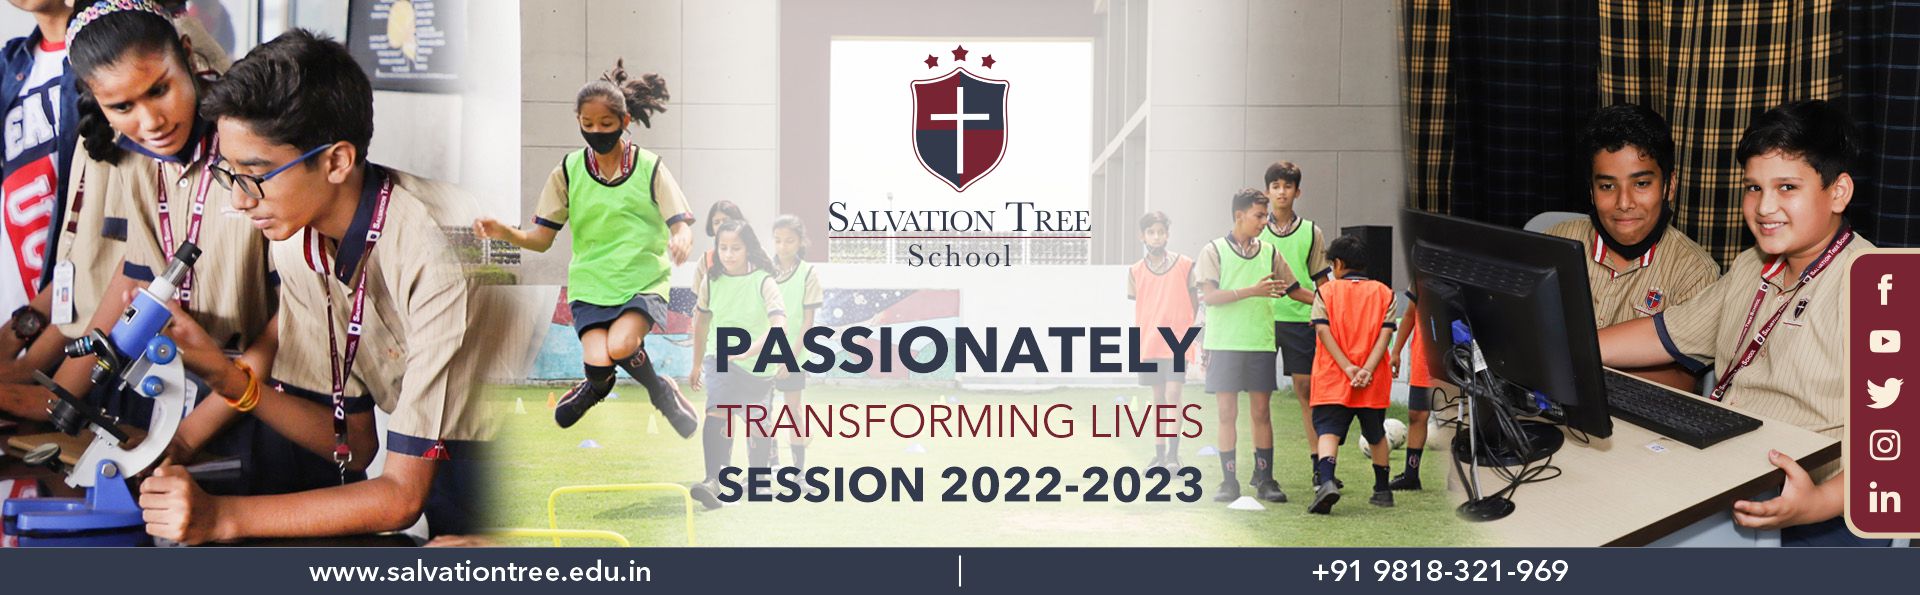 Salvation Tree School Cover Image